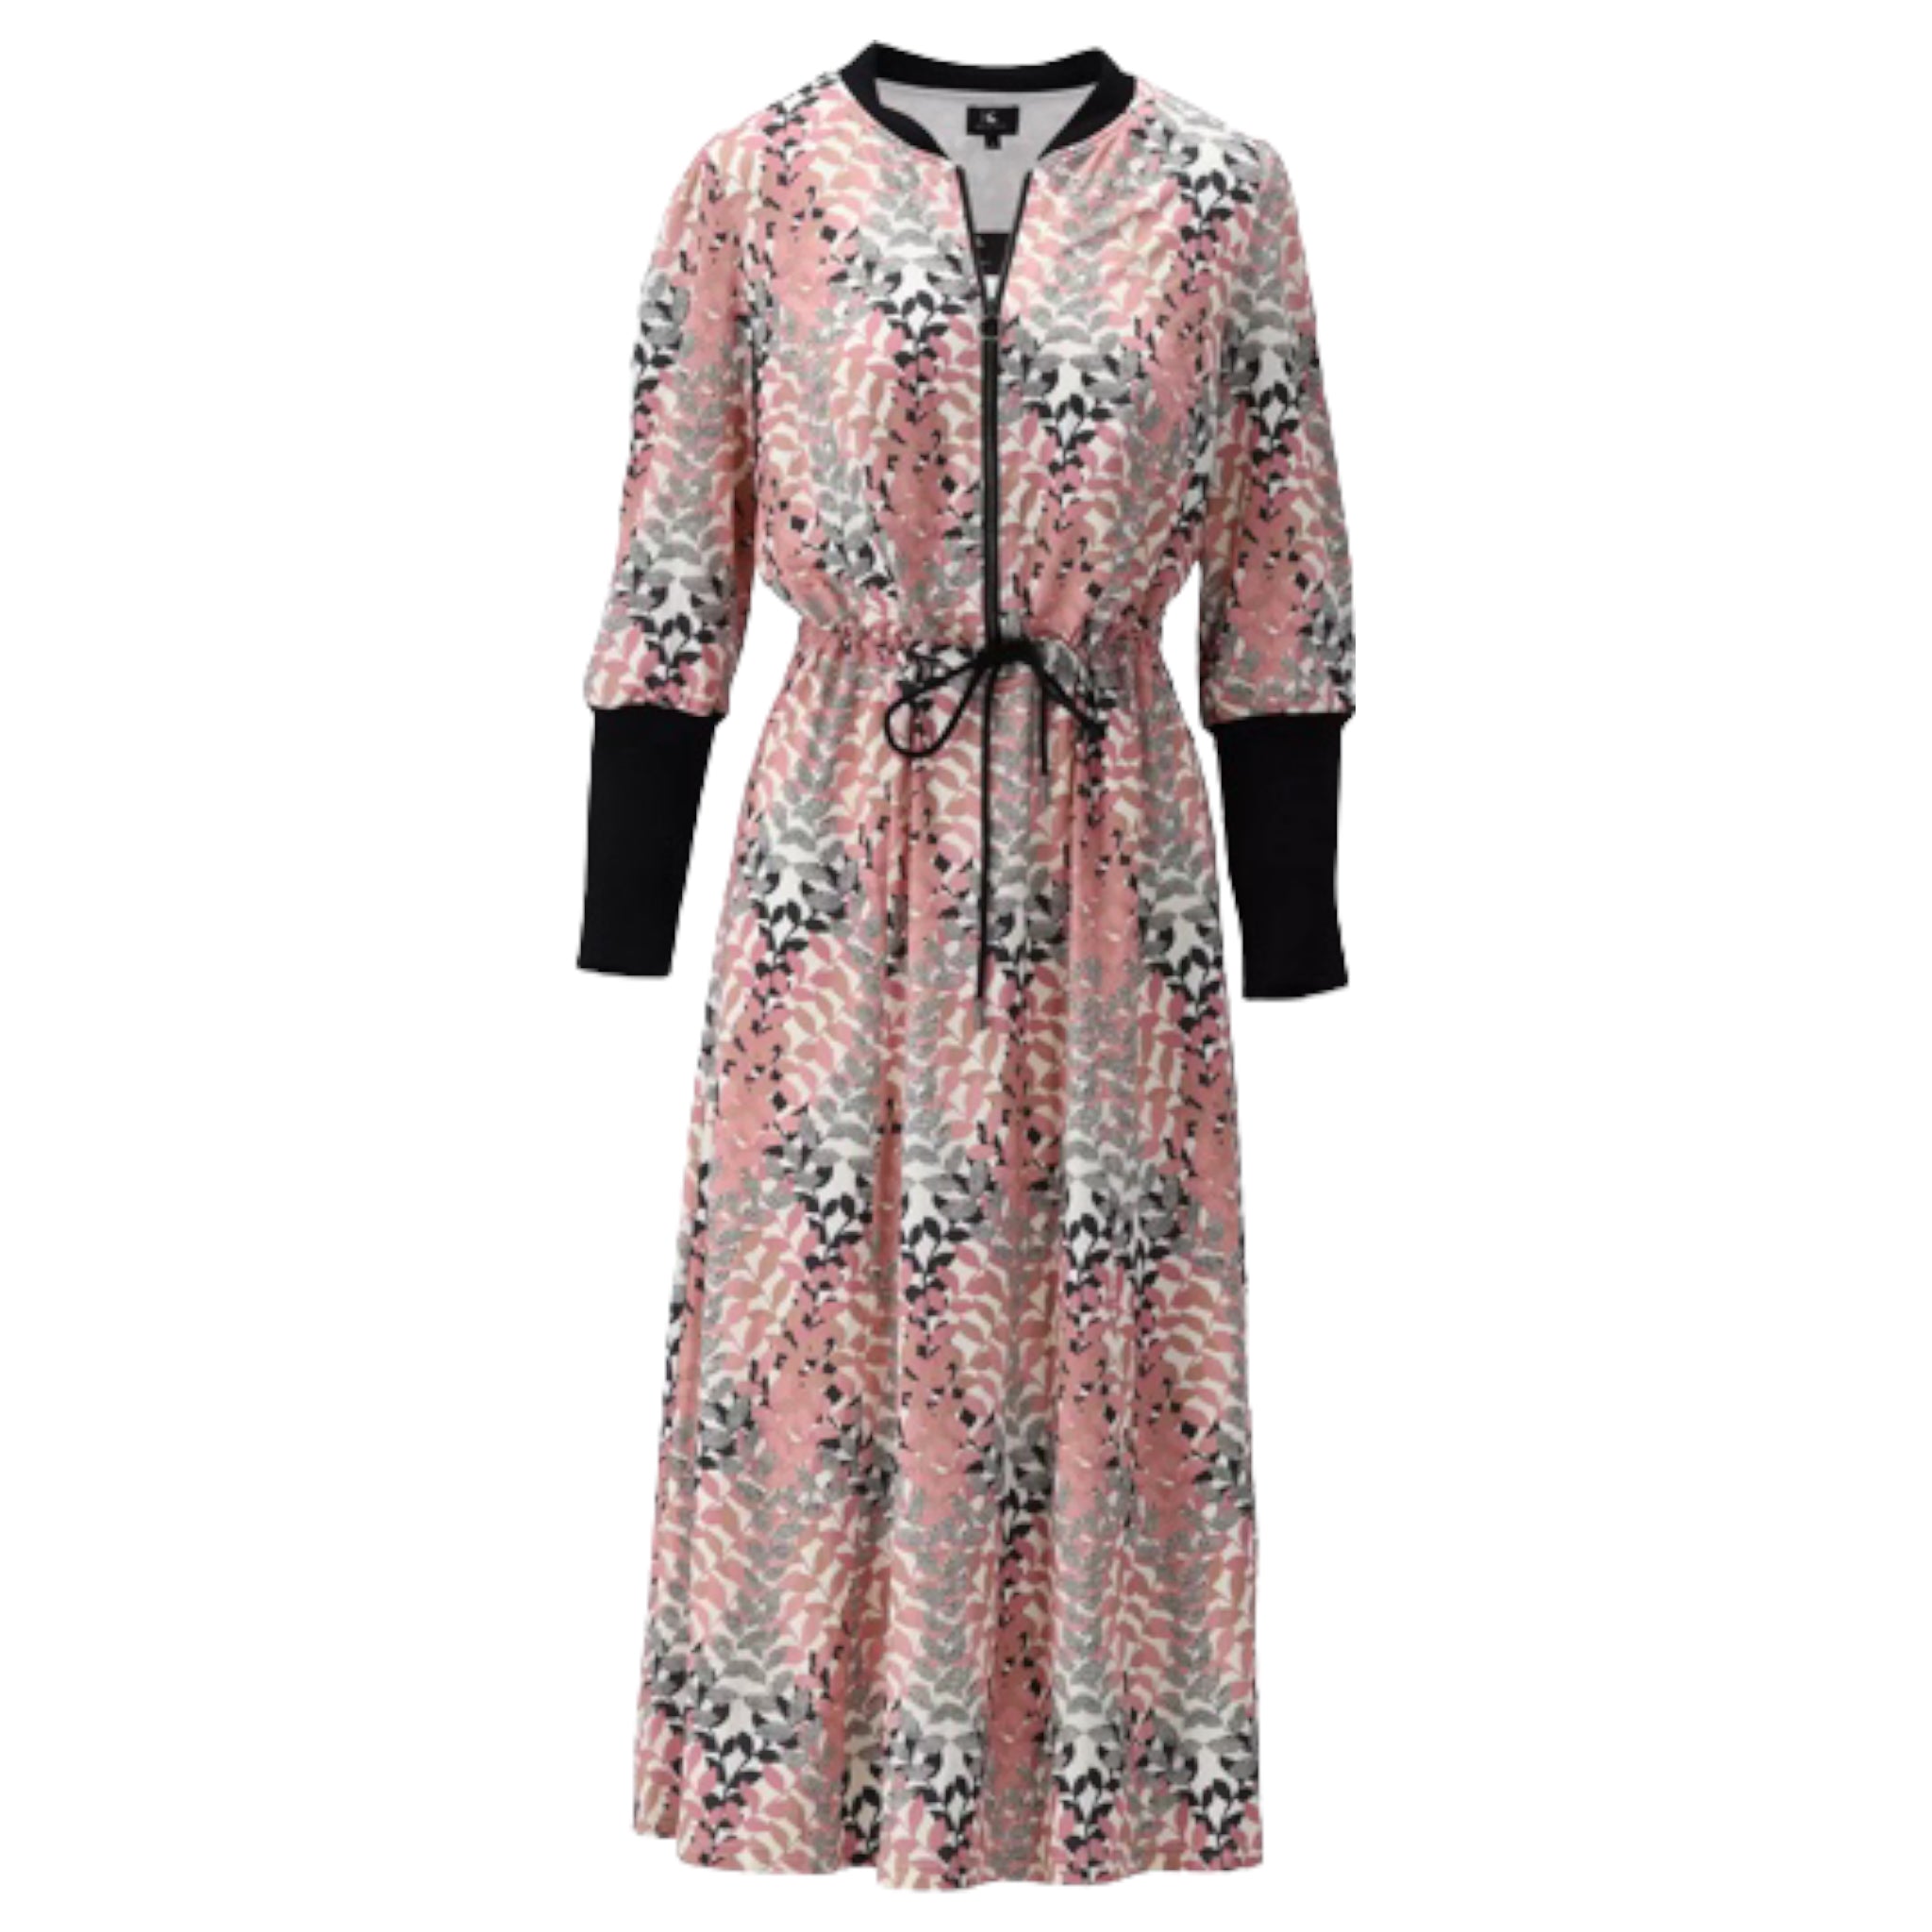 K Design Floral Print Dress with Zip Pink